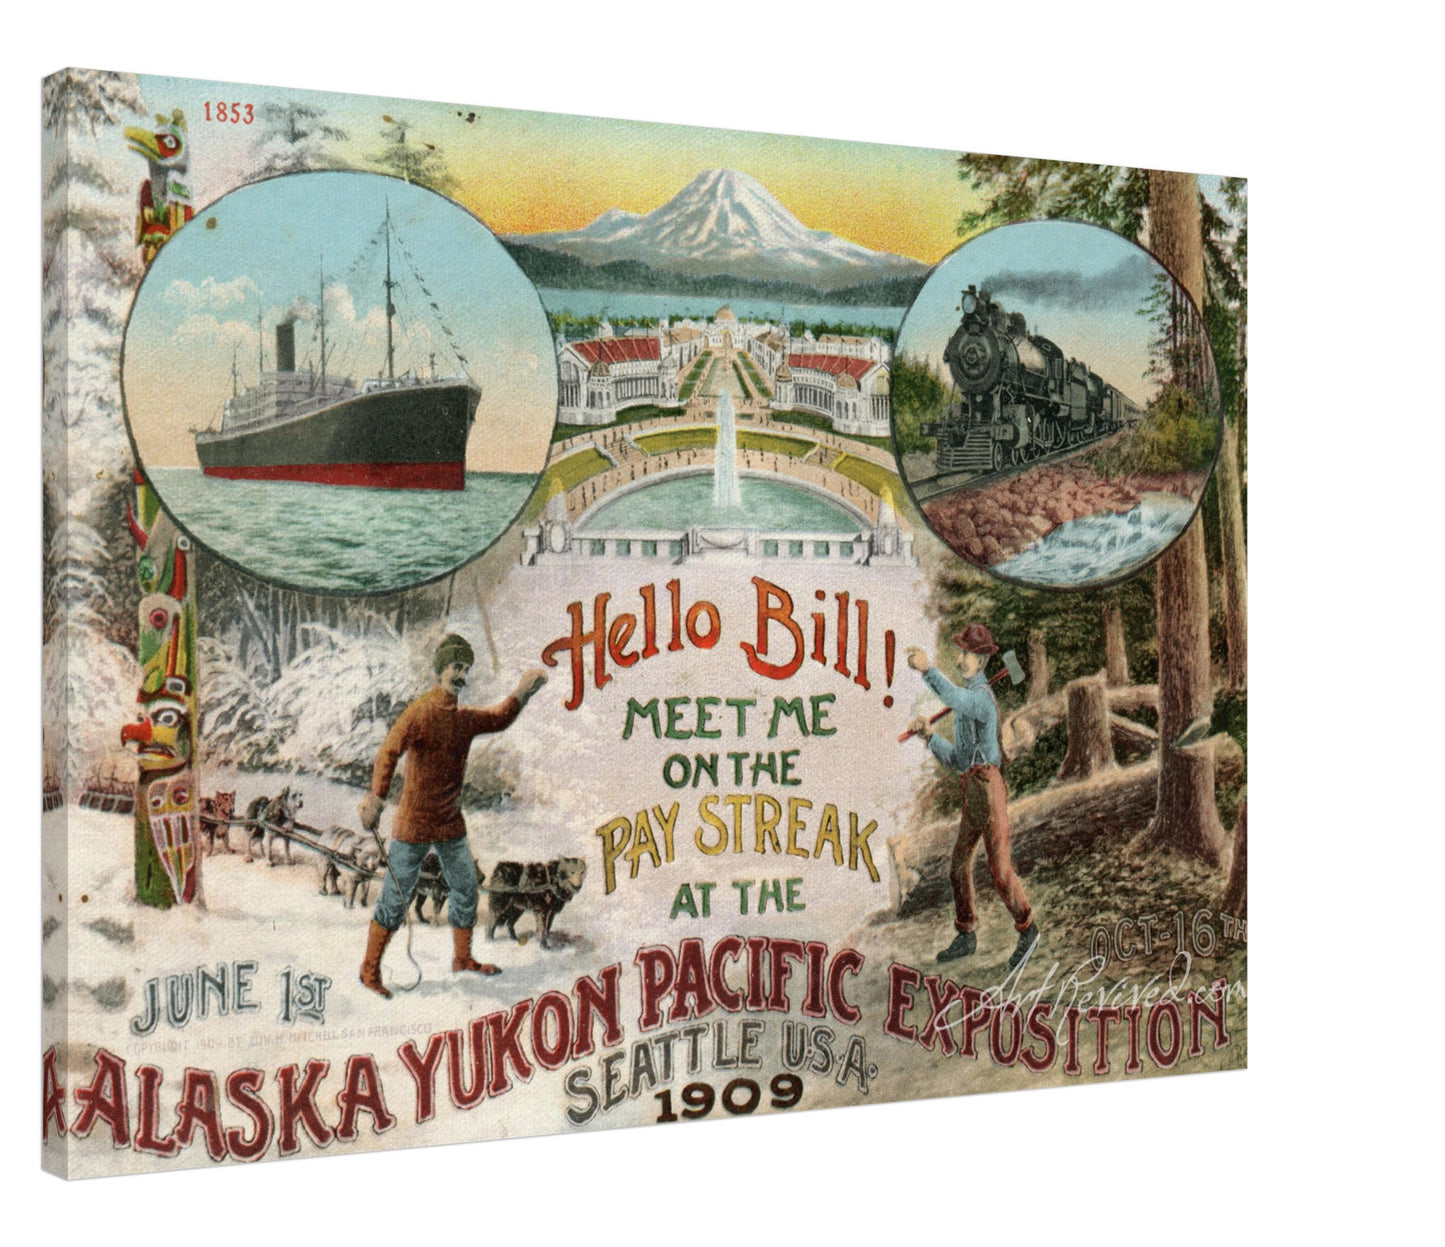 Alaska-Yukon Pacific Expo Seattle WA 1909